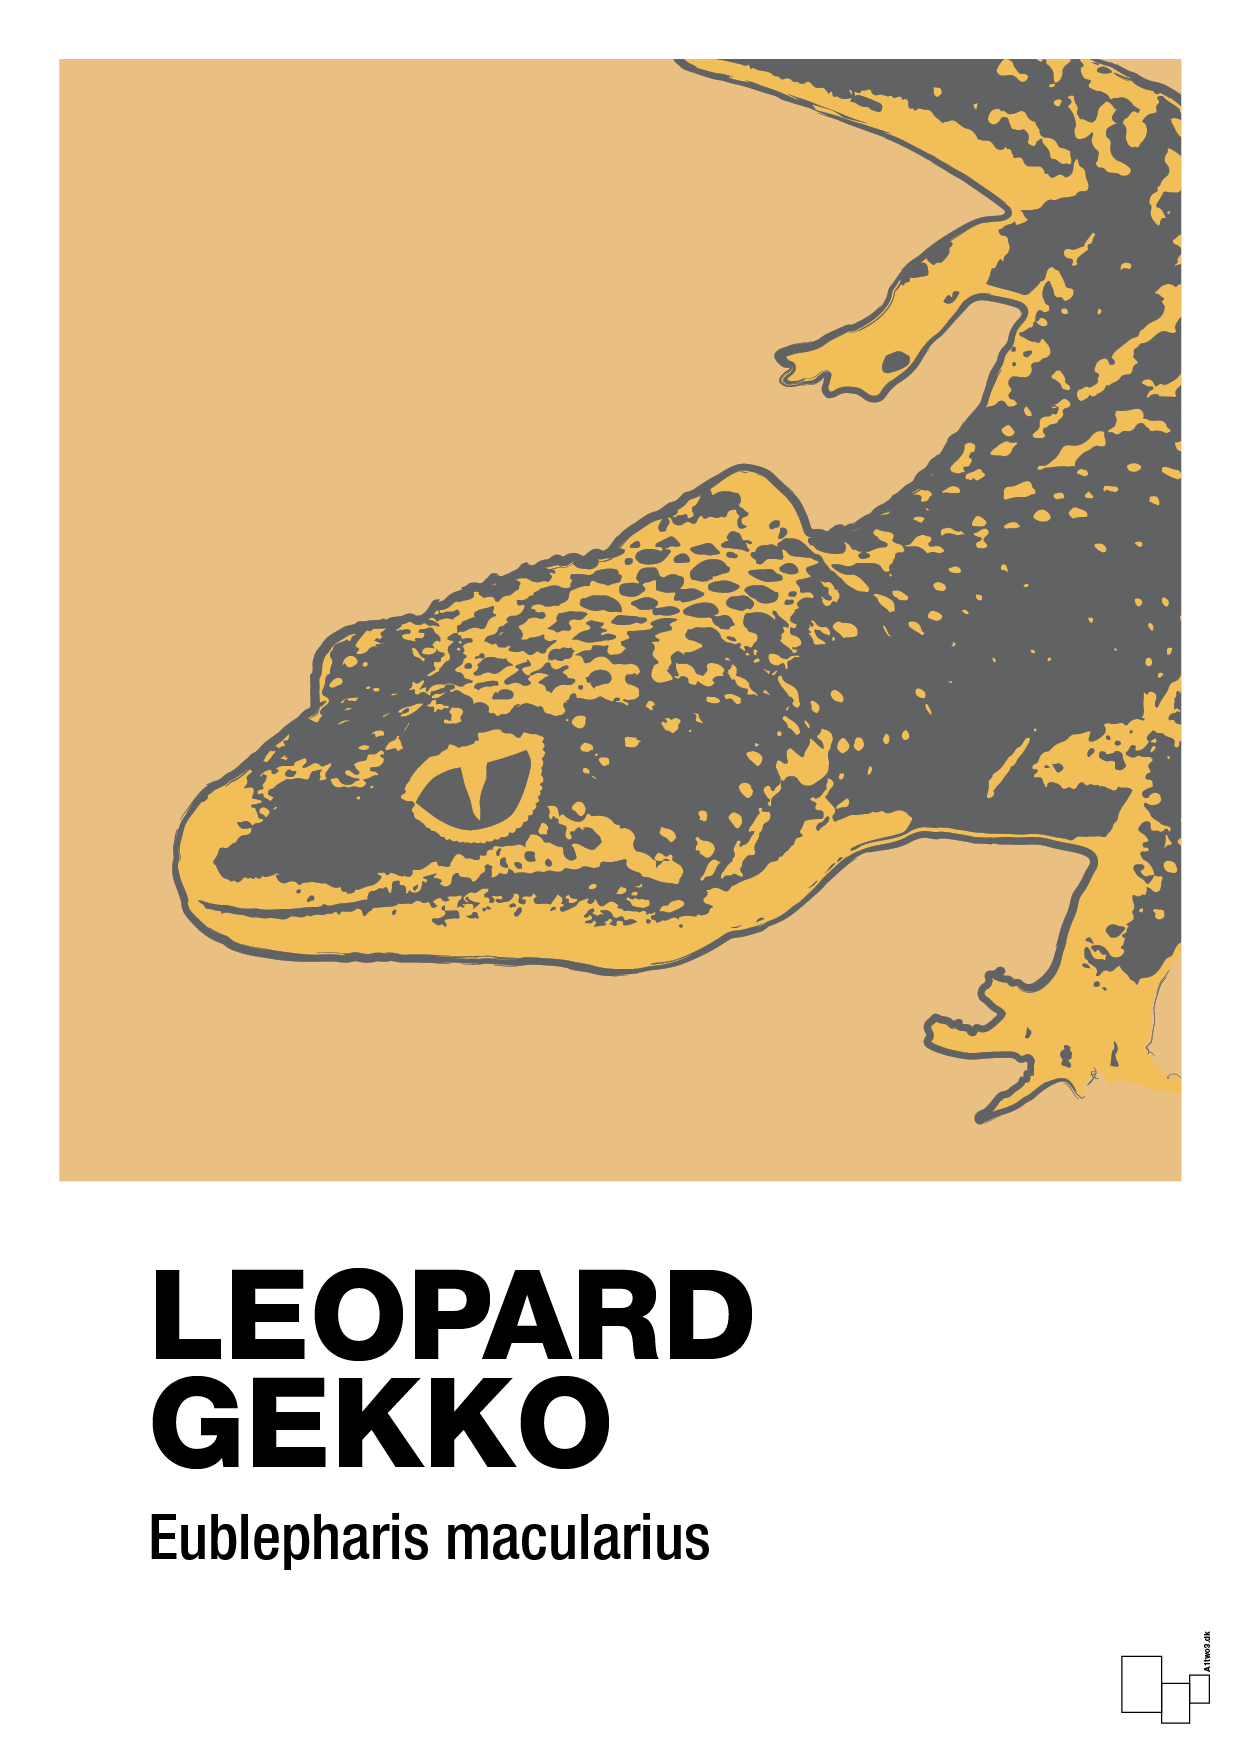 leopard gekko - Plakat med Videnskab i Charismatic